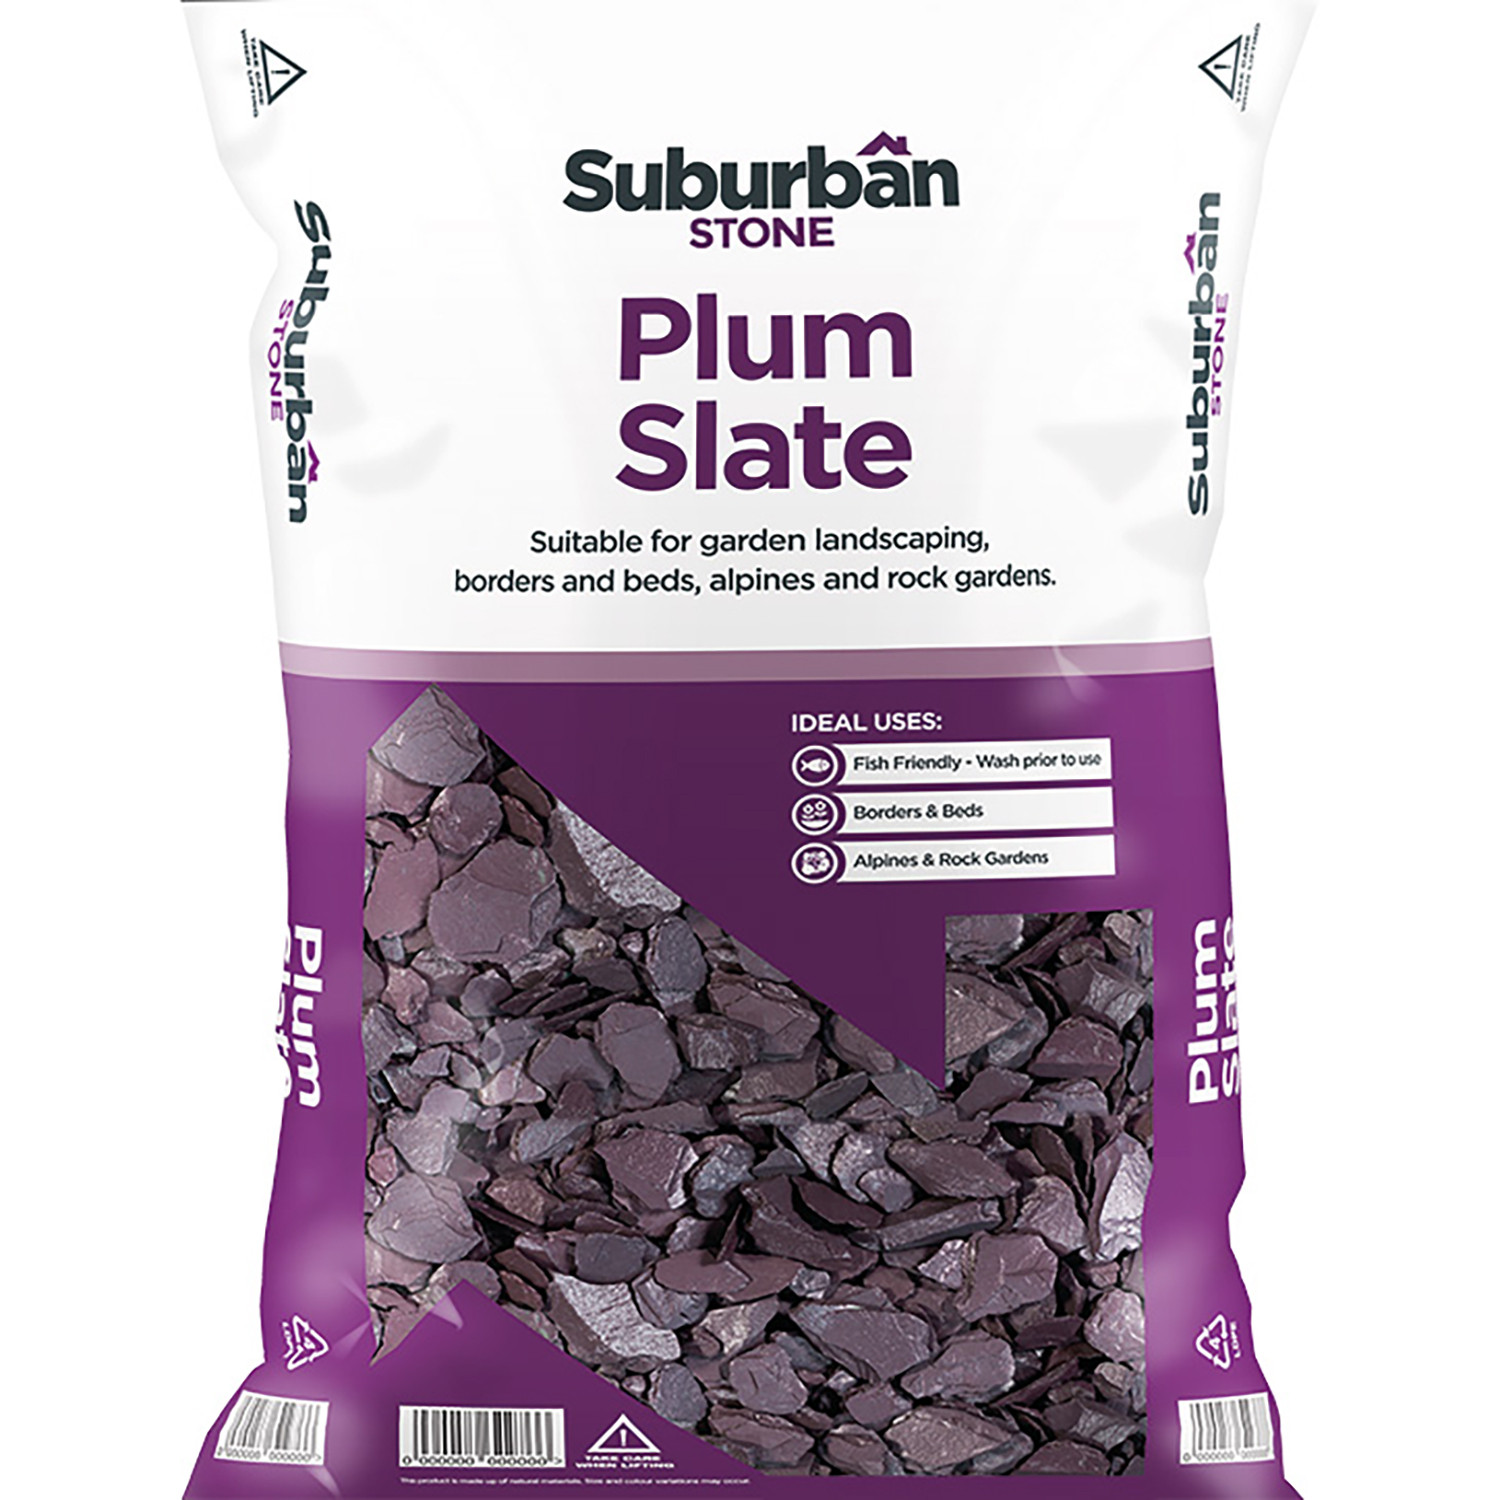 Suburban Stone Plum Slate Chippings 20kg Image